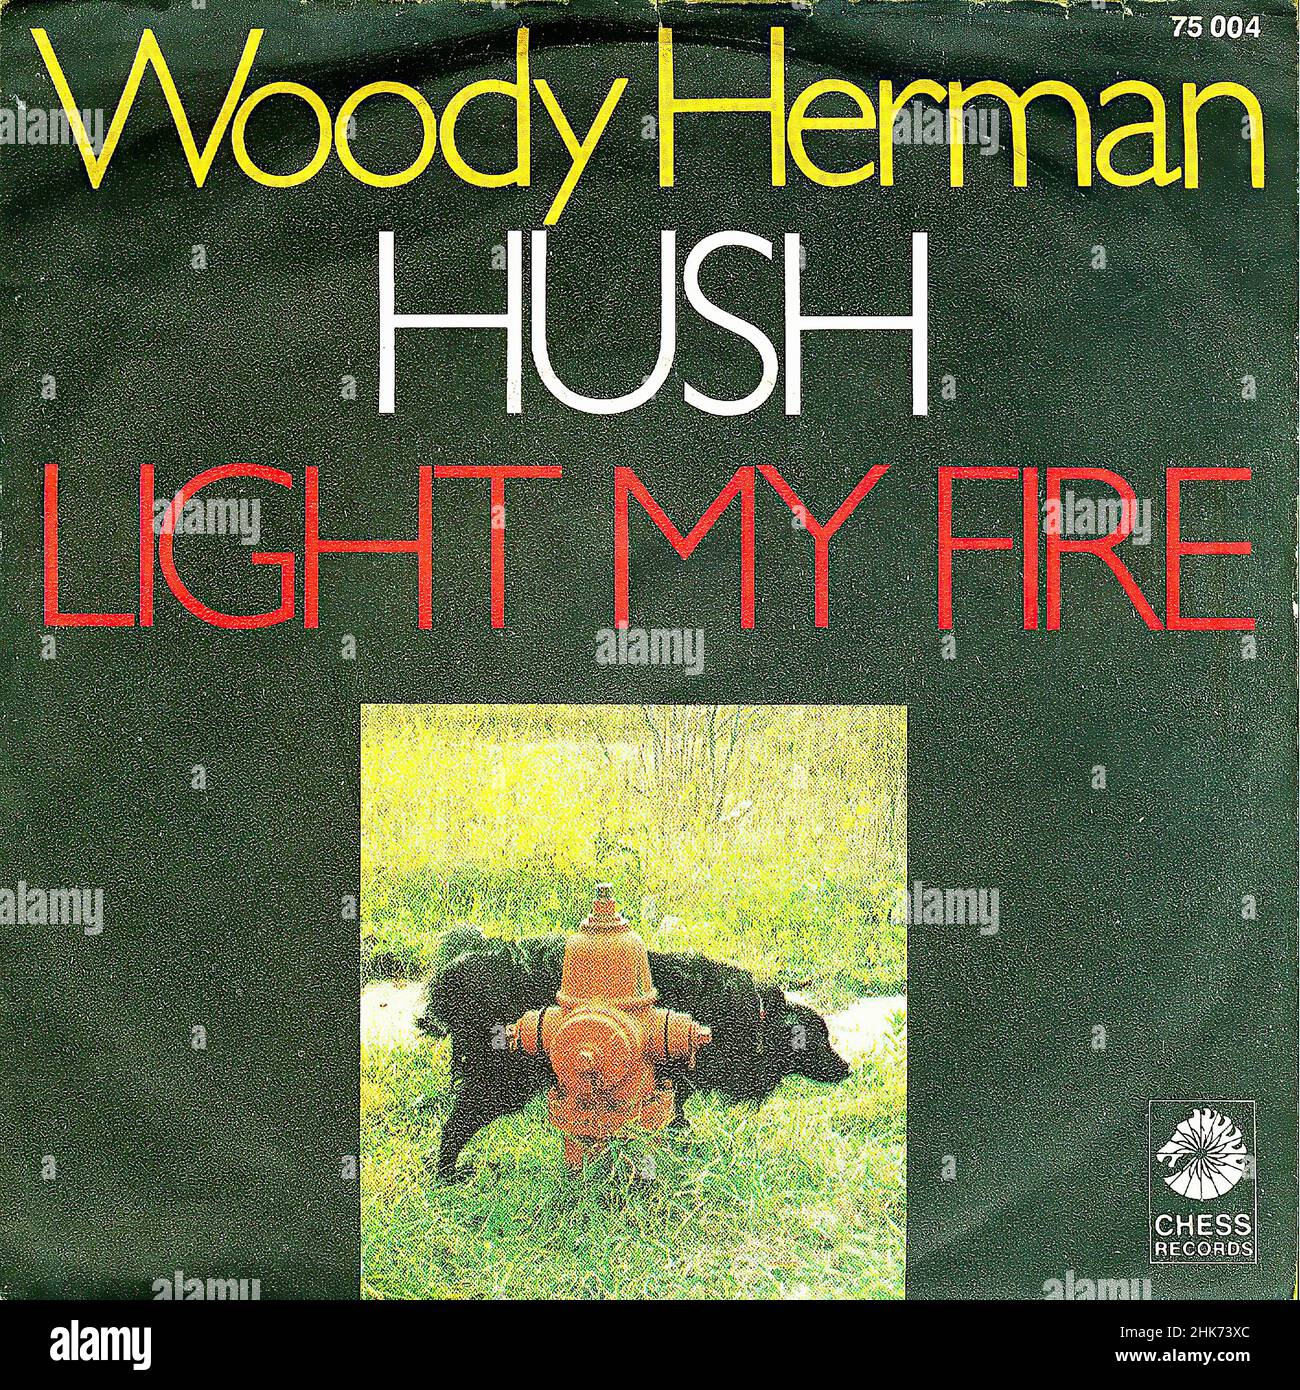 Vintage vinyl record cover - Herman, Woody - Hush - Light My Fire - Chess - D - 1969 Stock Photo